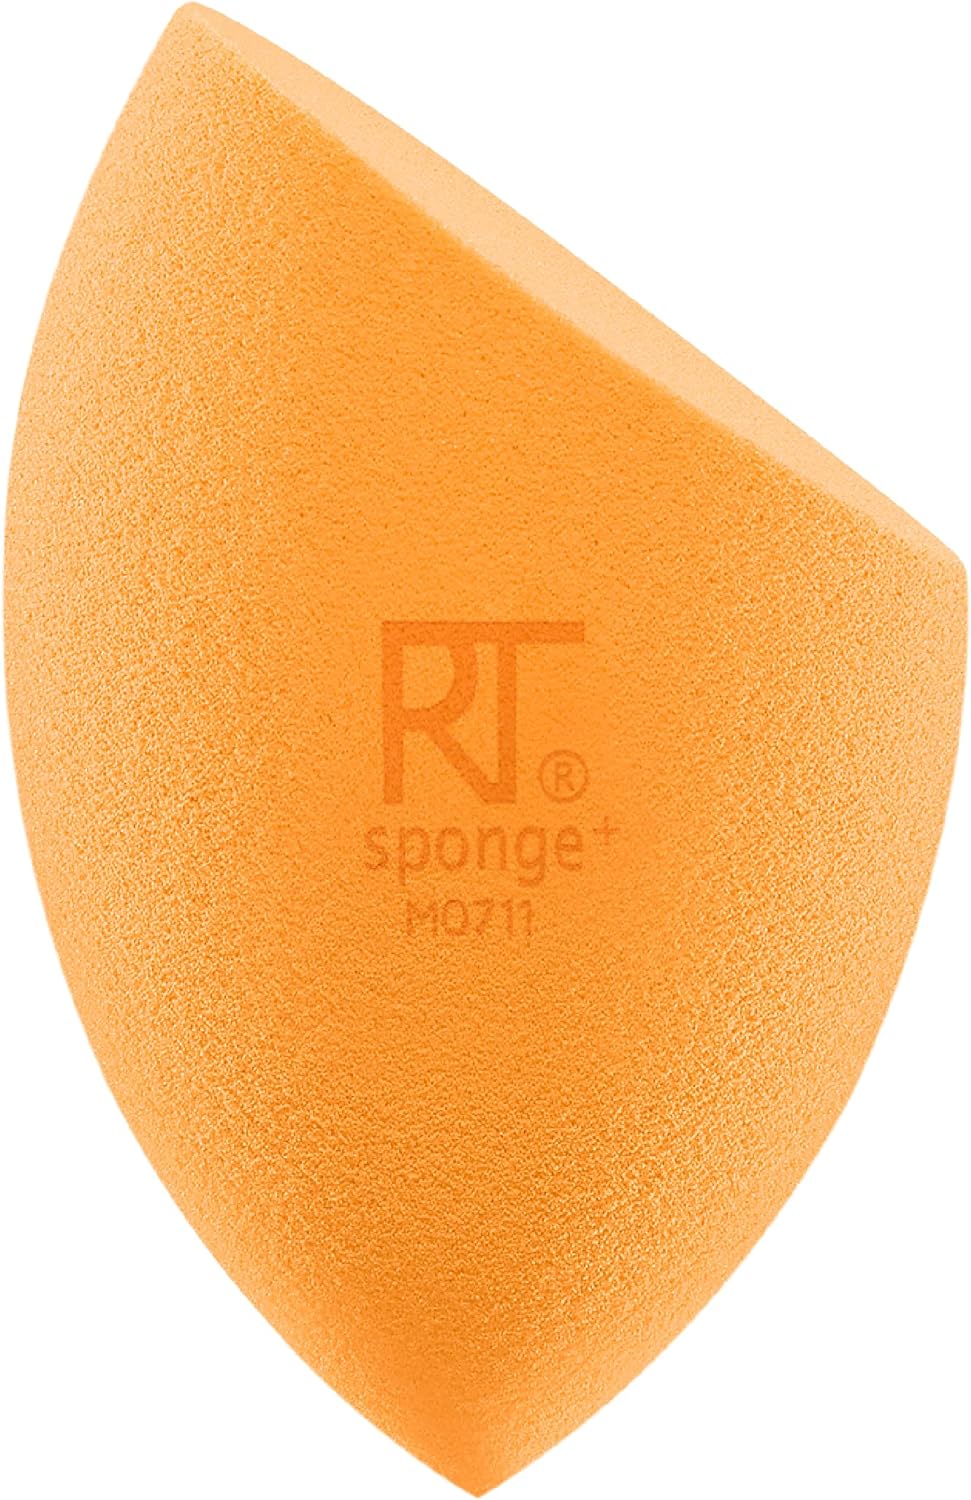 1492 Real Techniques 4 Mini Miracle Complexion Sponges